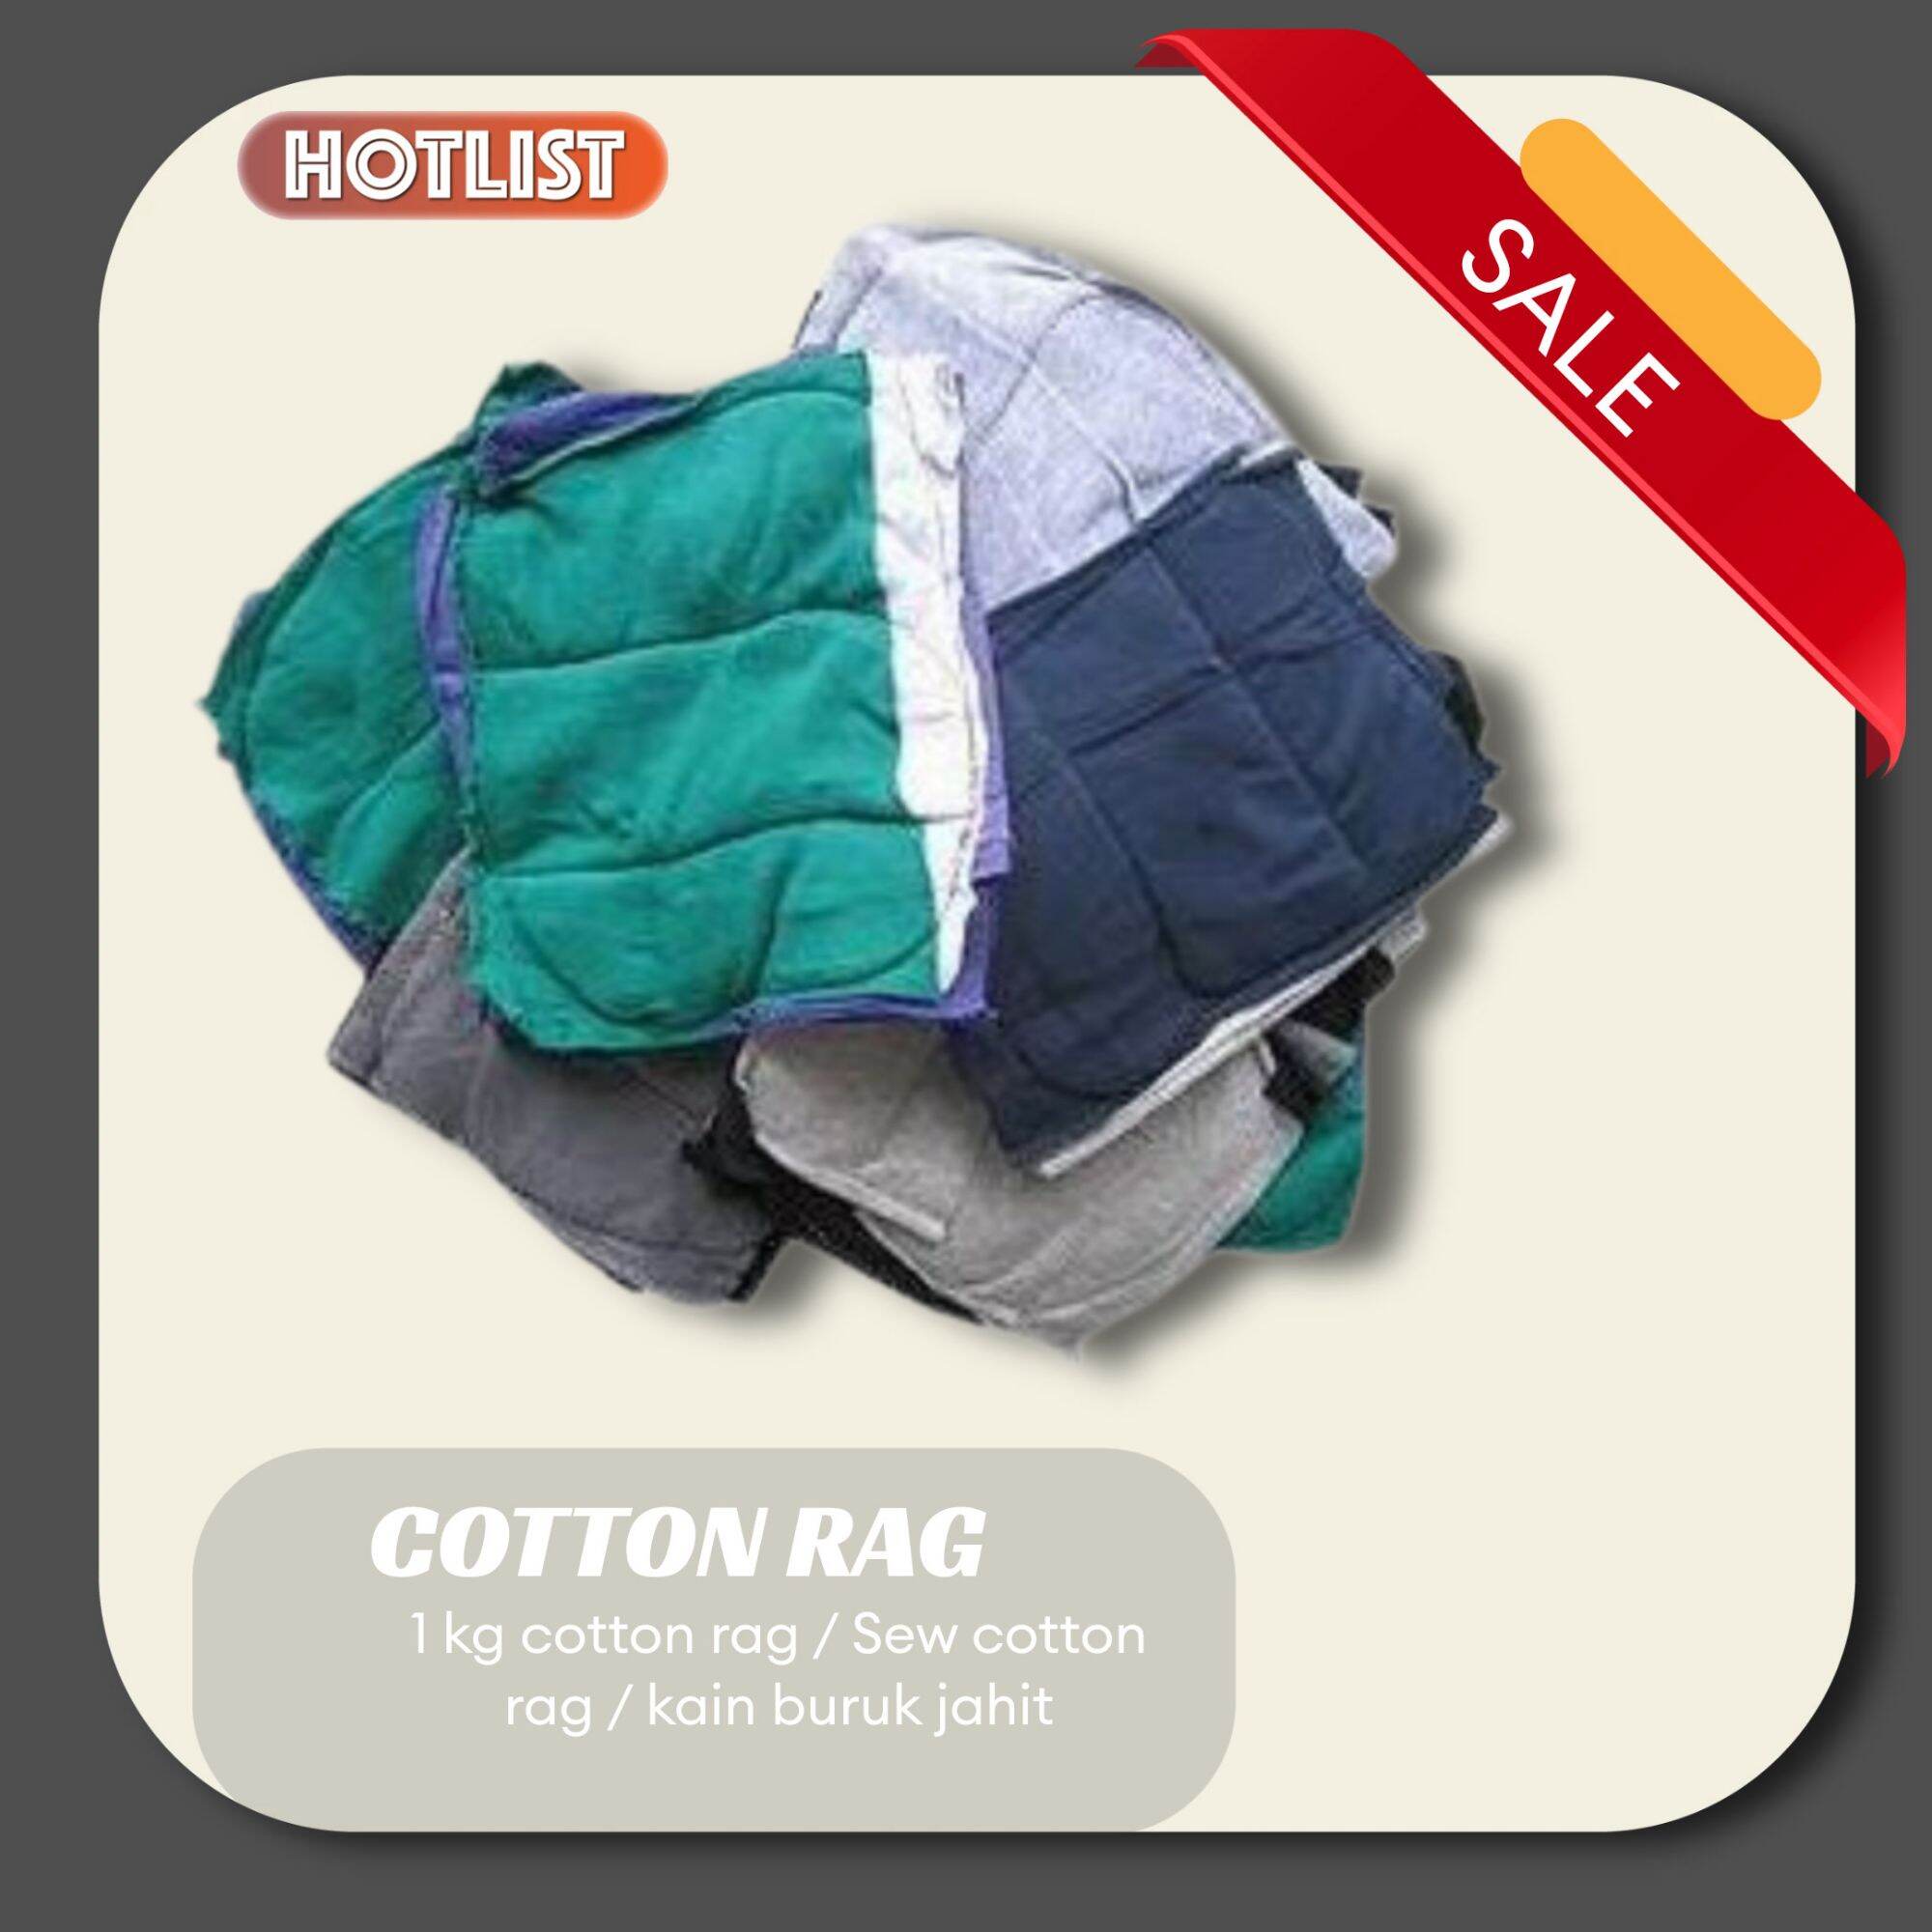 1kg Sew Cotton Rag / Mix Cotton Rag / Kain Buruk Jahit